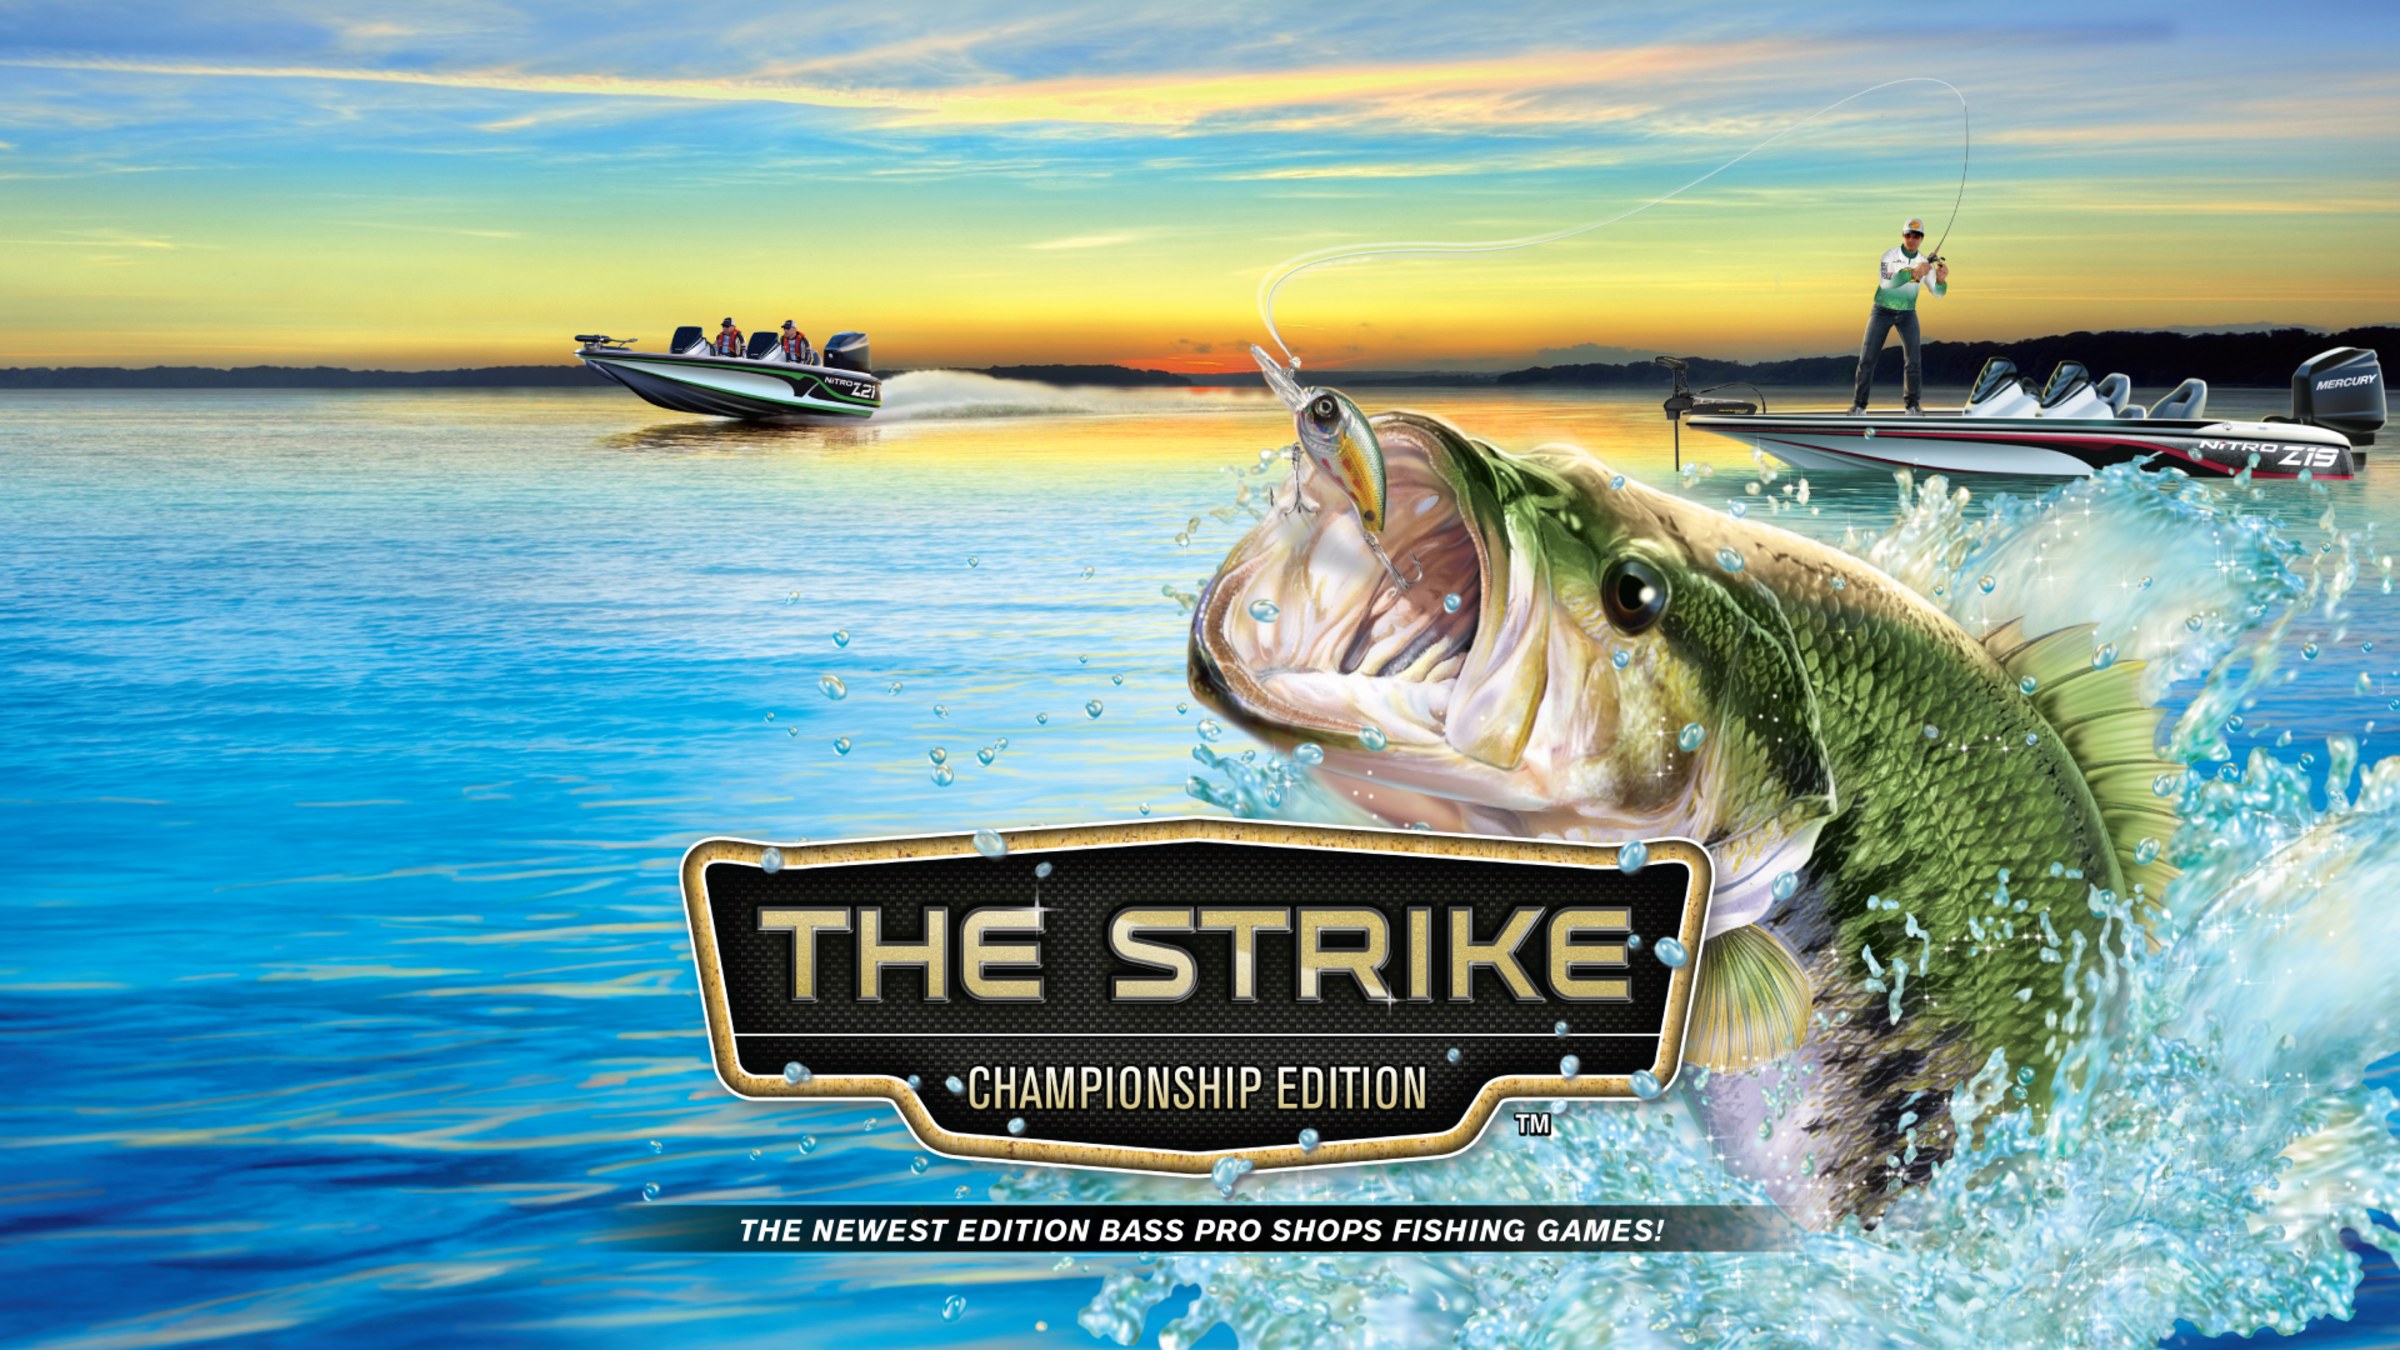 The Strike - Championship Edition